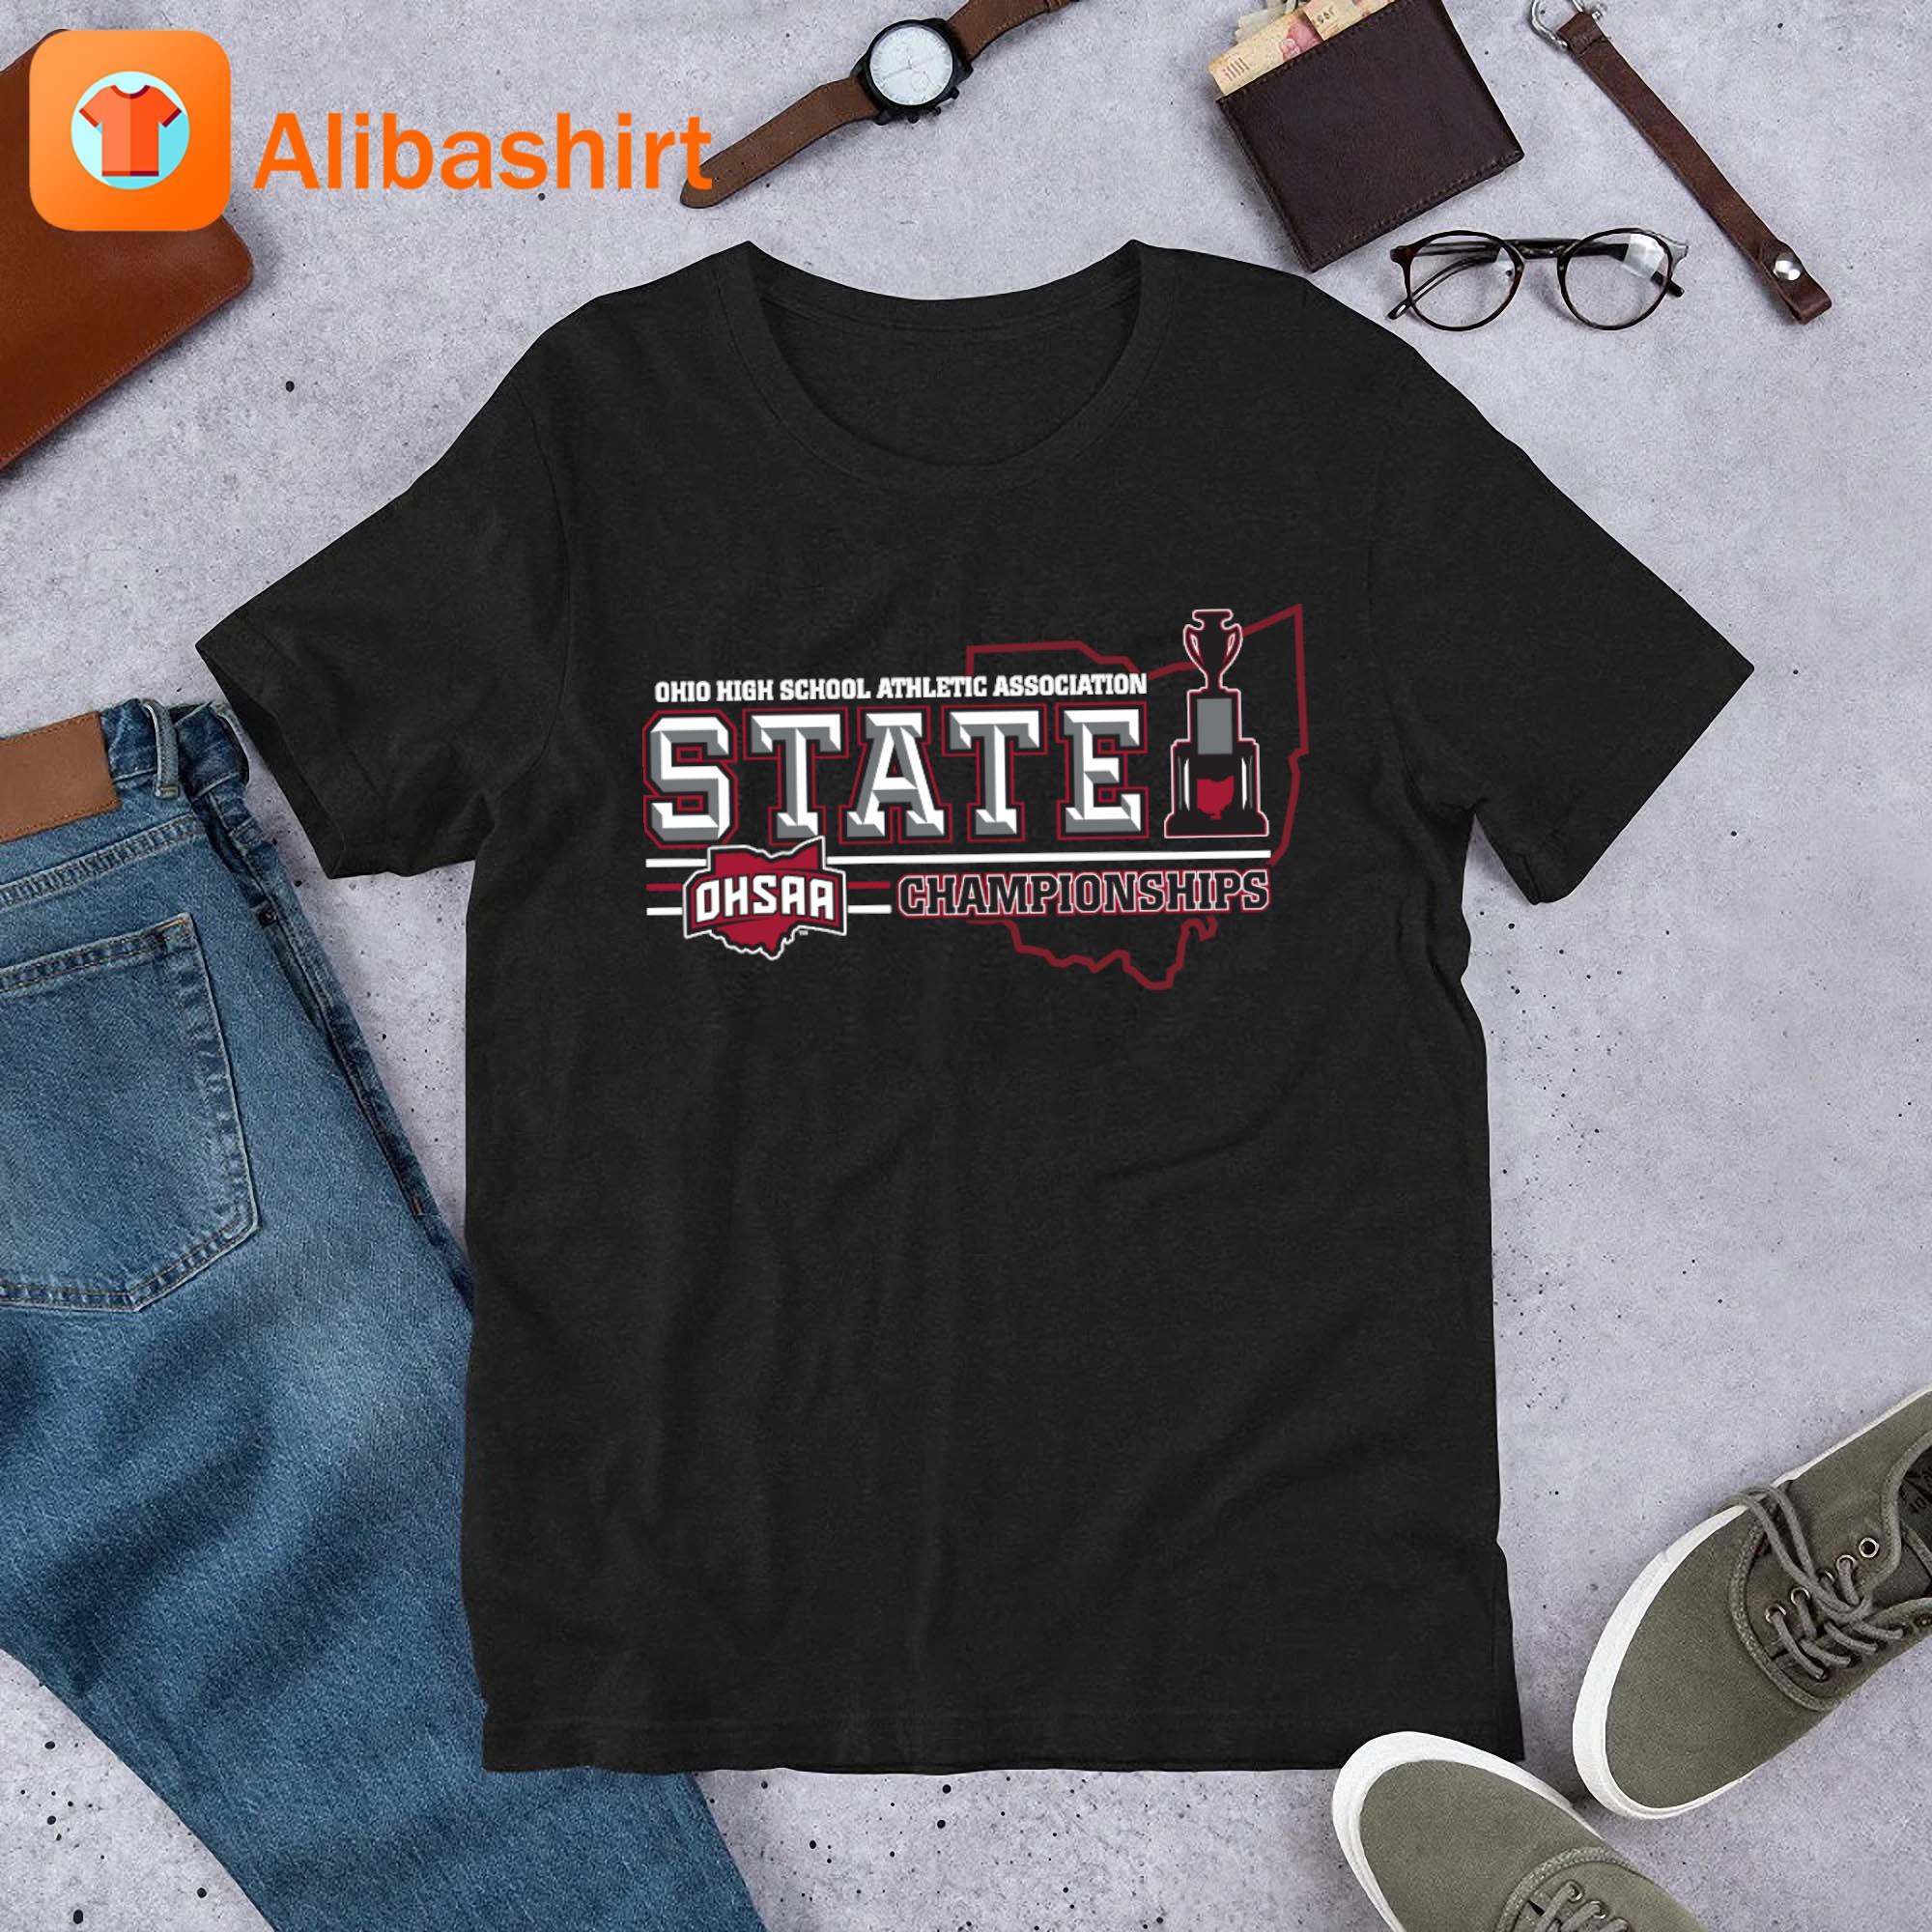 Ohio High School Athletic Association State Championships shirt